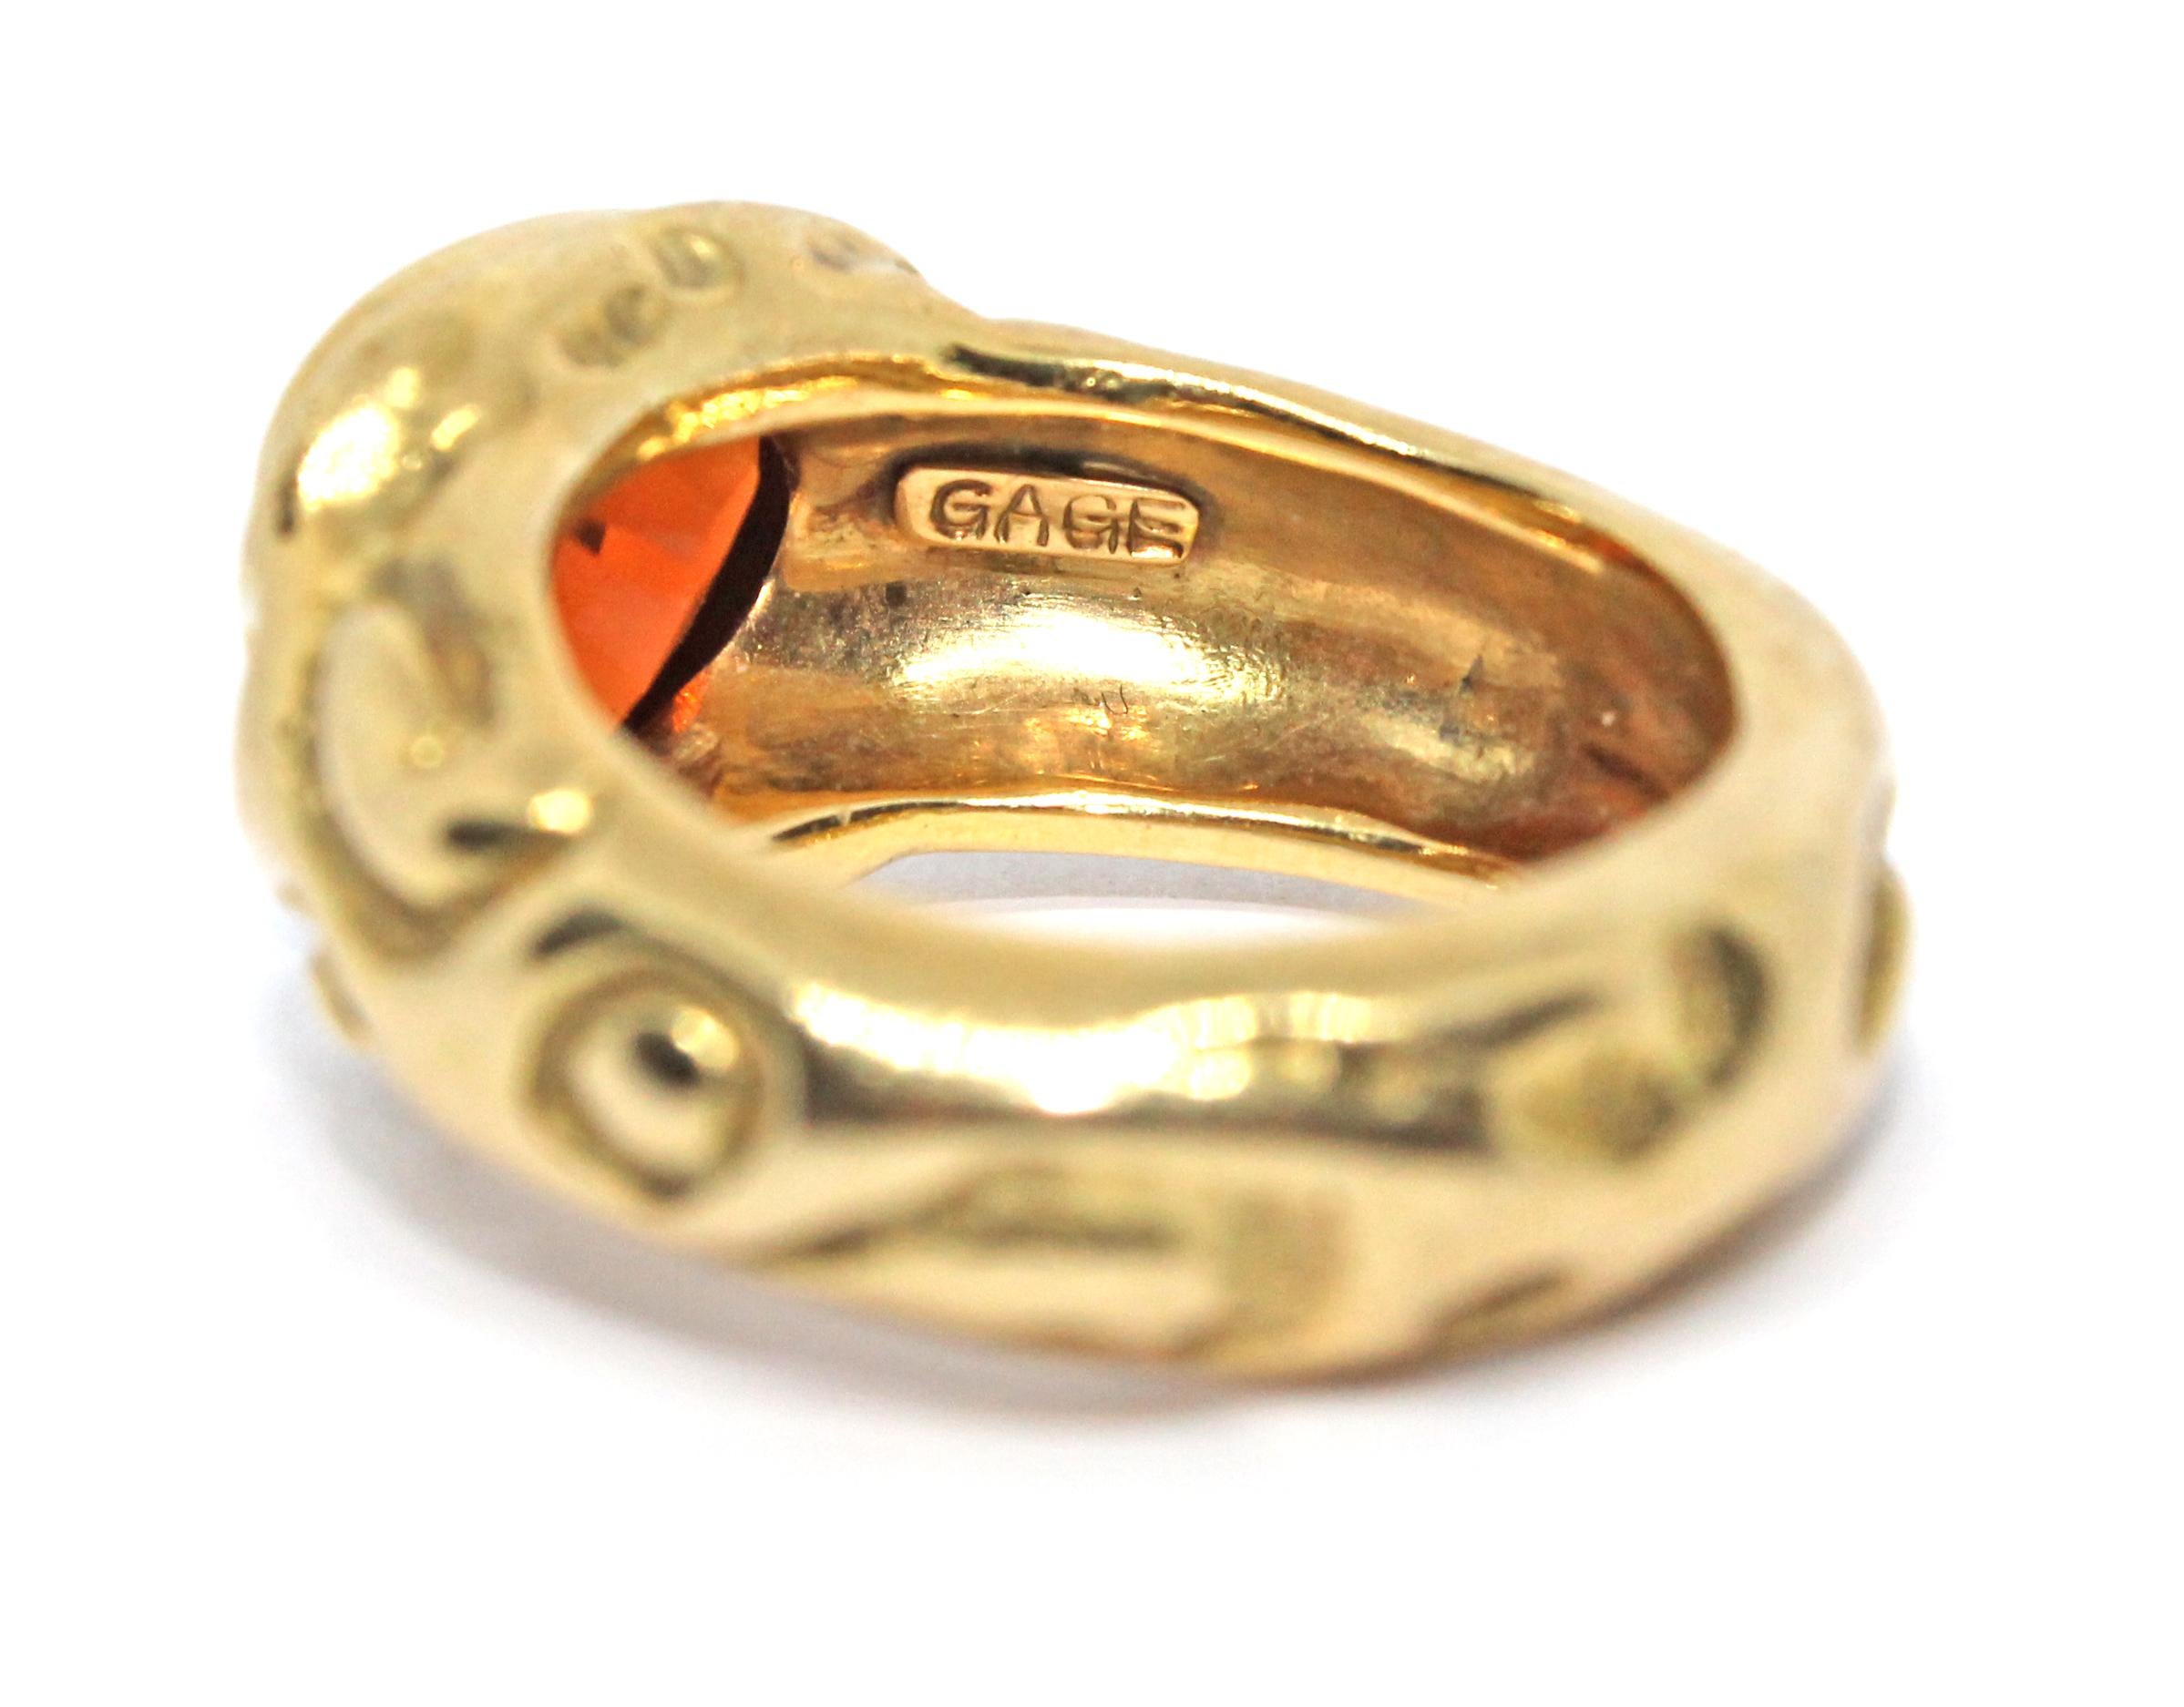 1989 gold ring